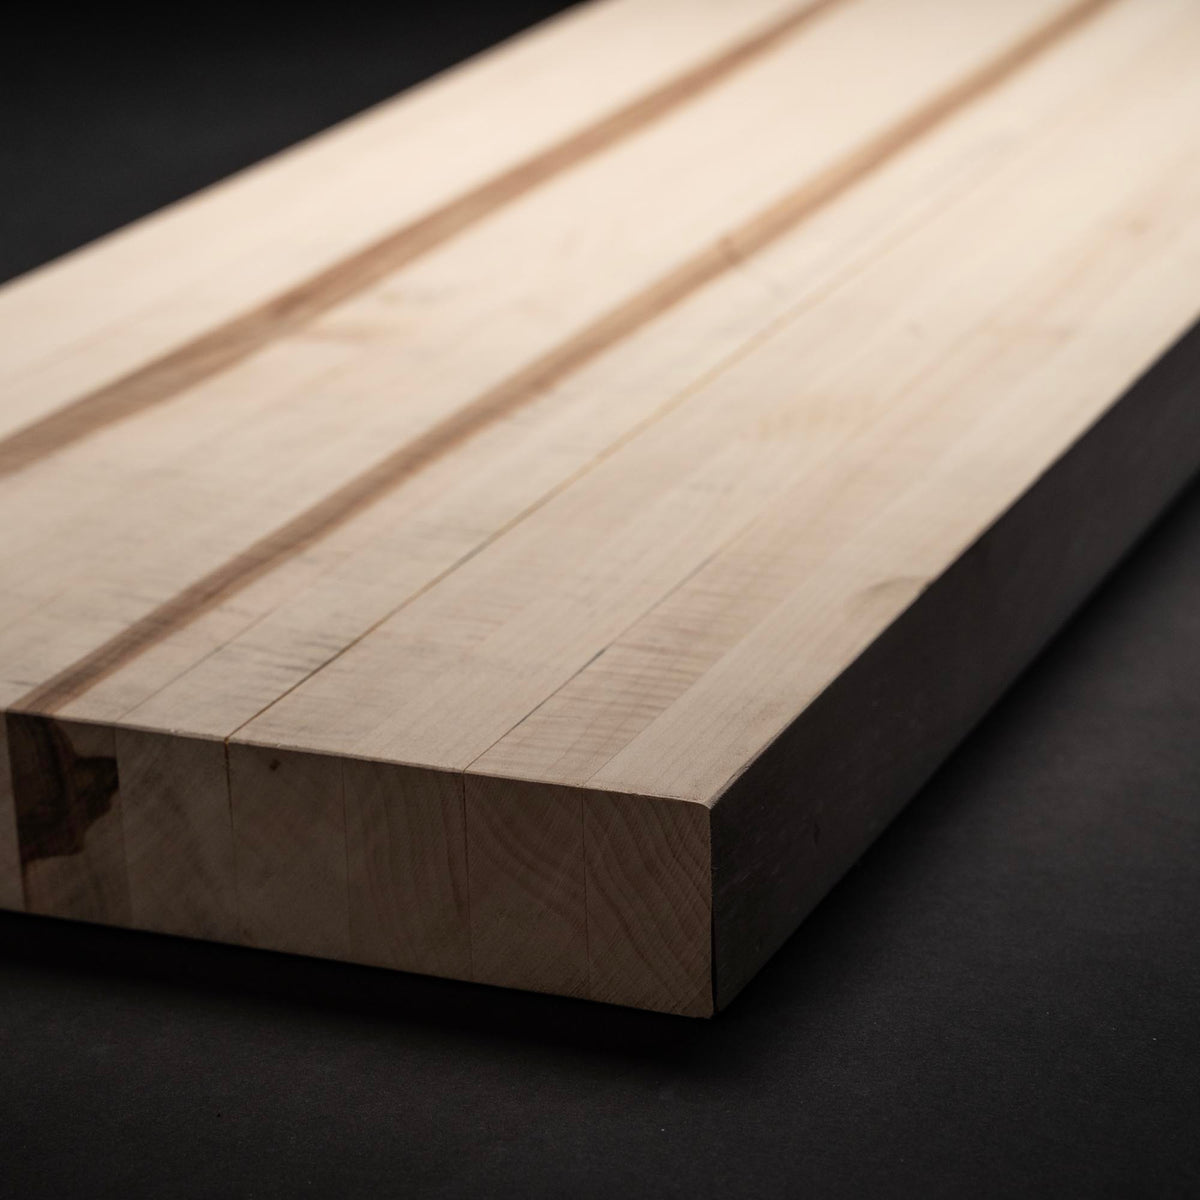 Hard Maple Wood 1.5&quot; Edge Grain Butcher Block Shelf, Bar Top, Countertop, Floating Shelf shelves wide plank board up to material